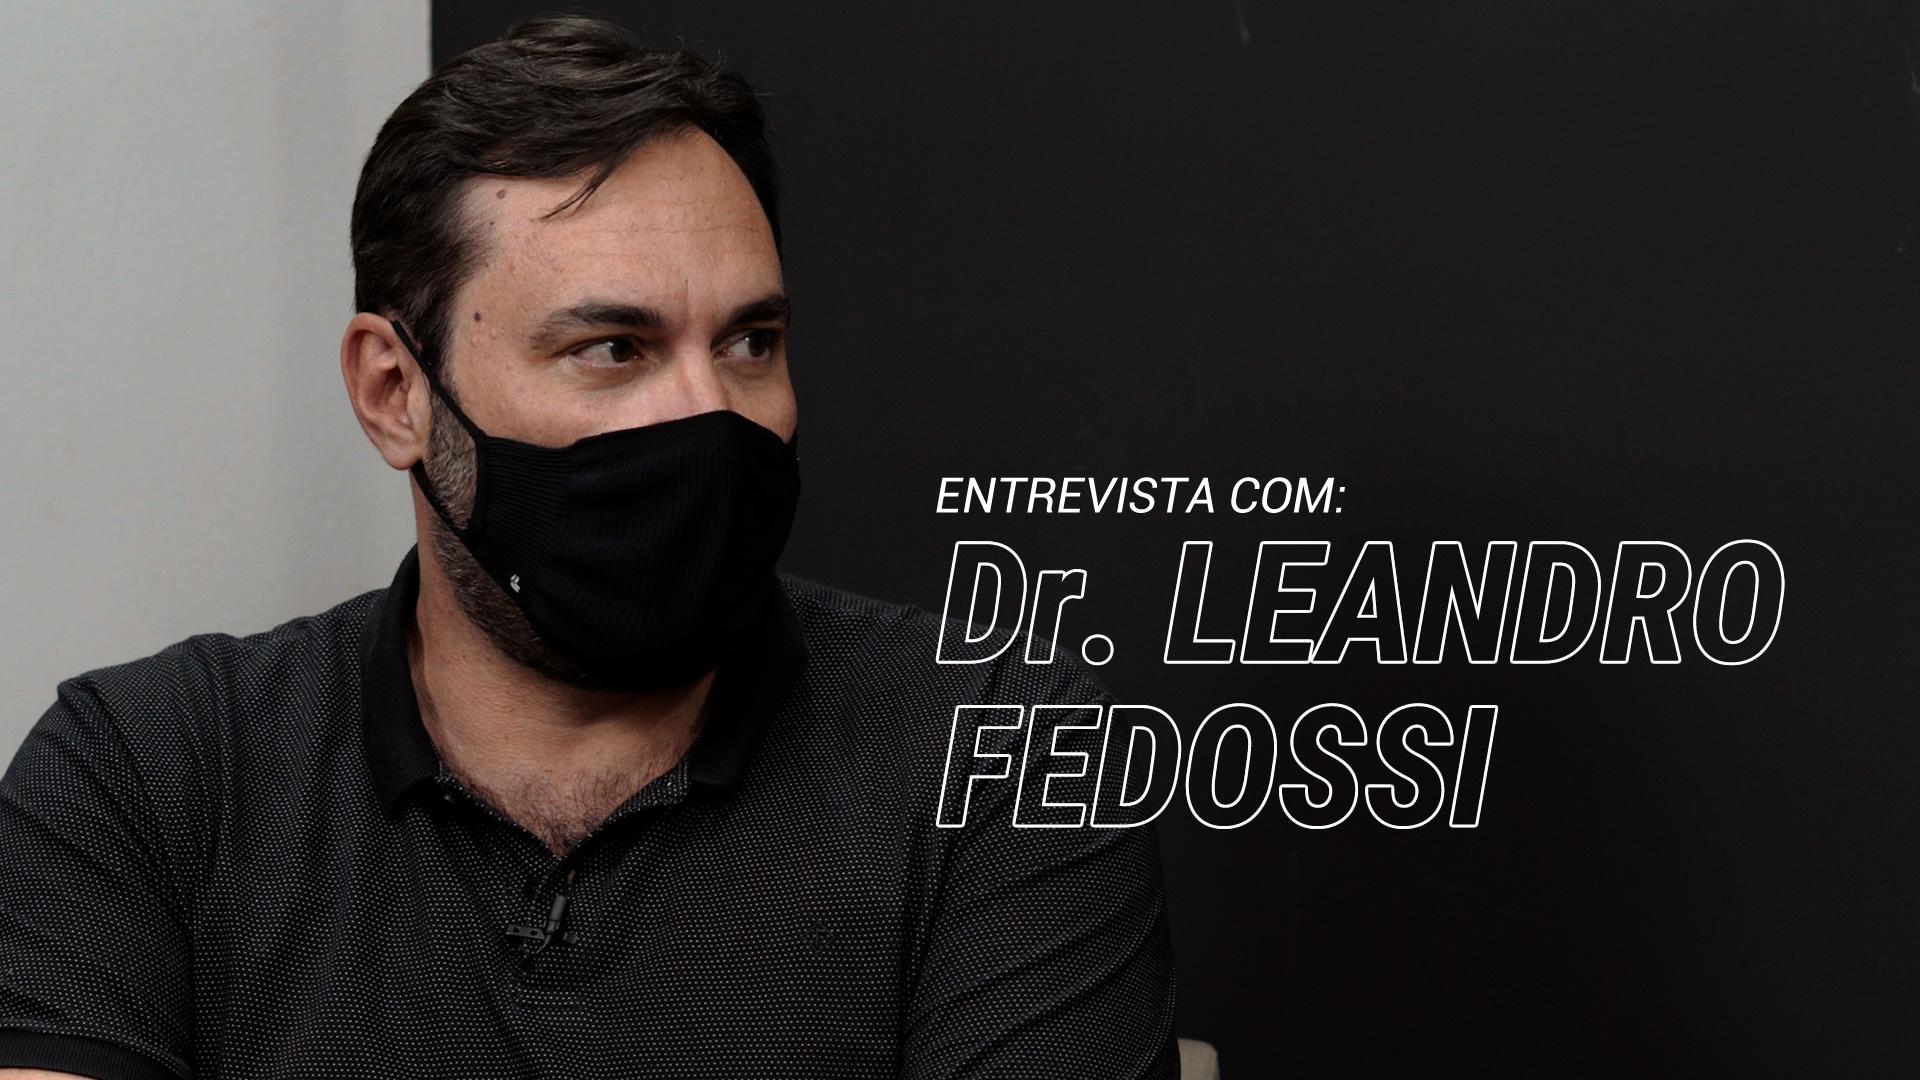 Dr. leandro fedossi